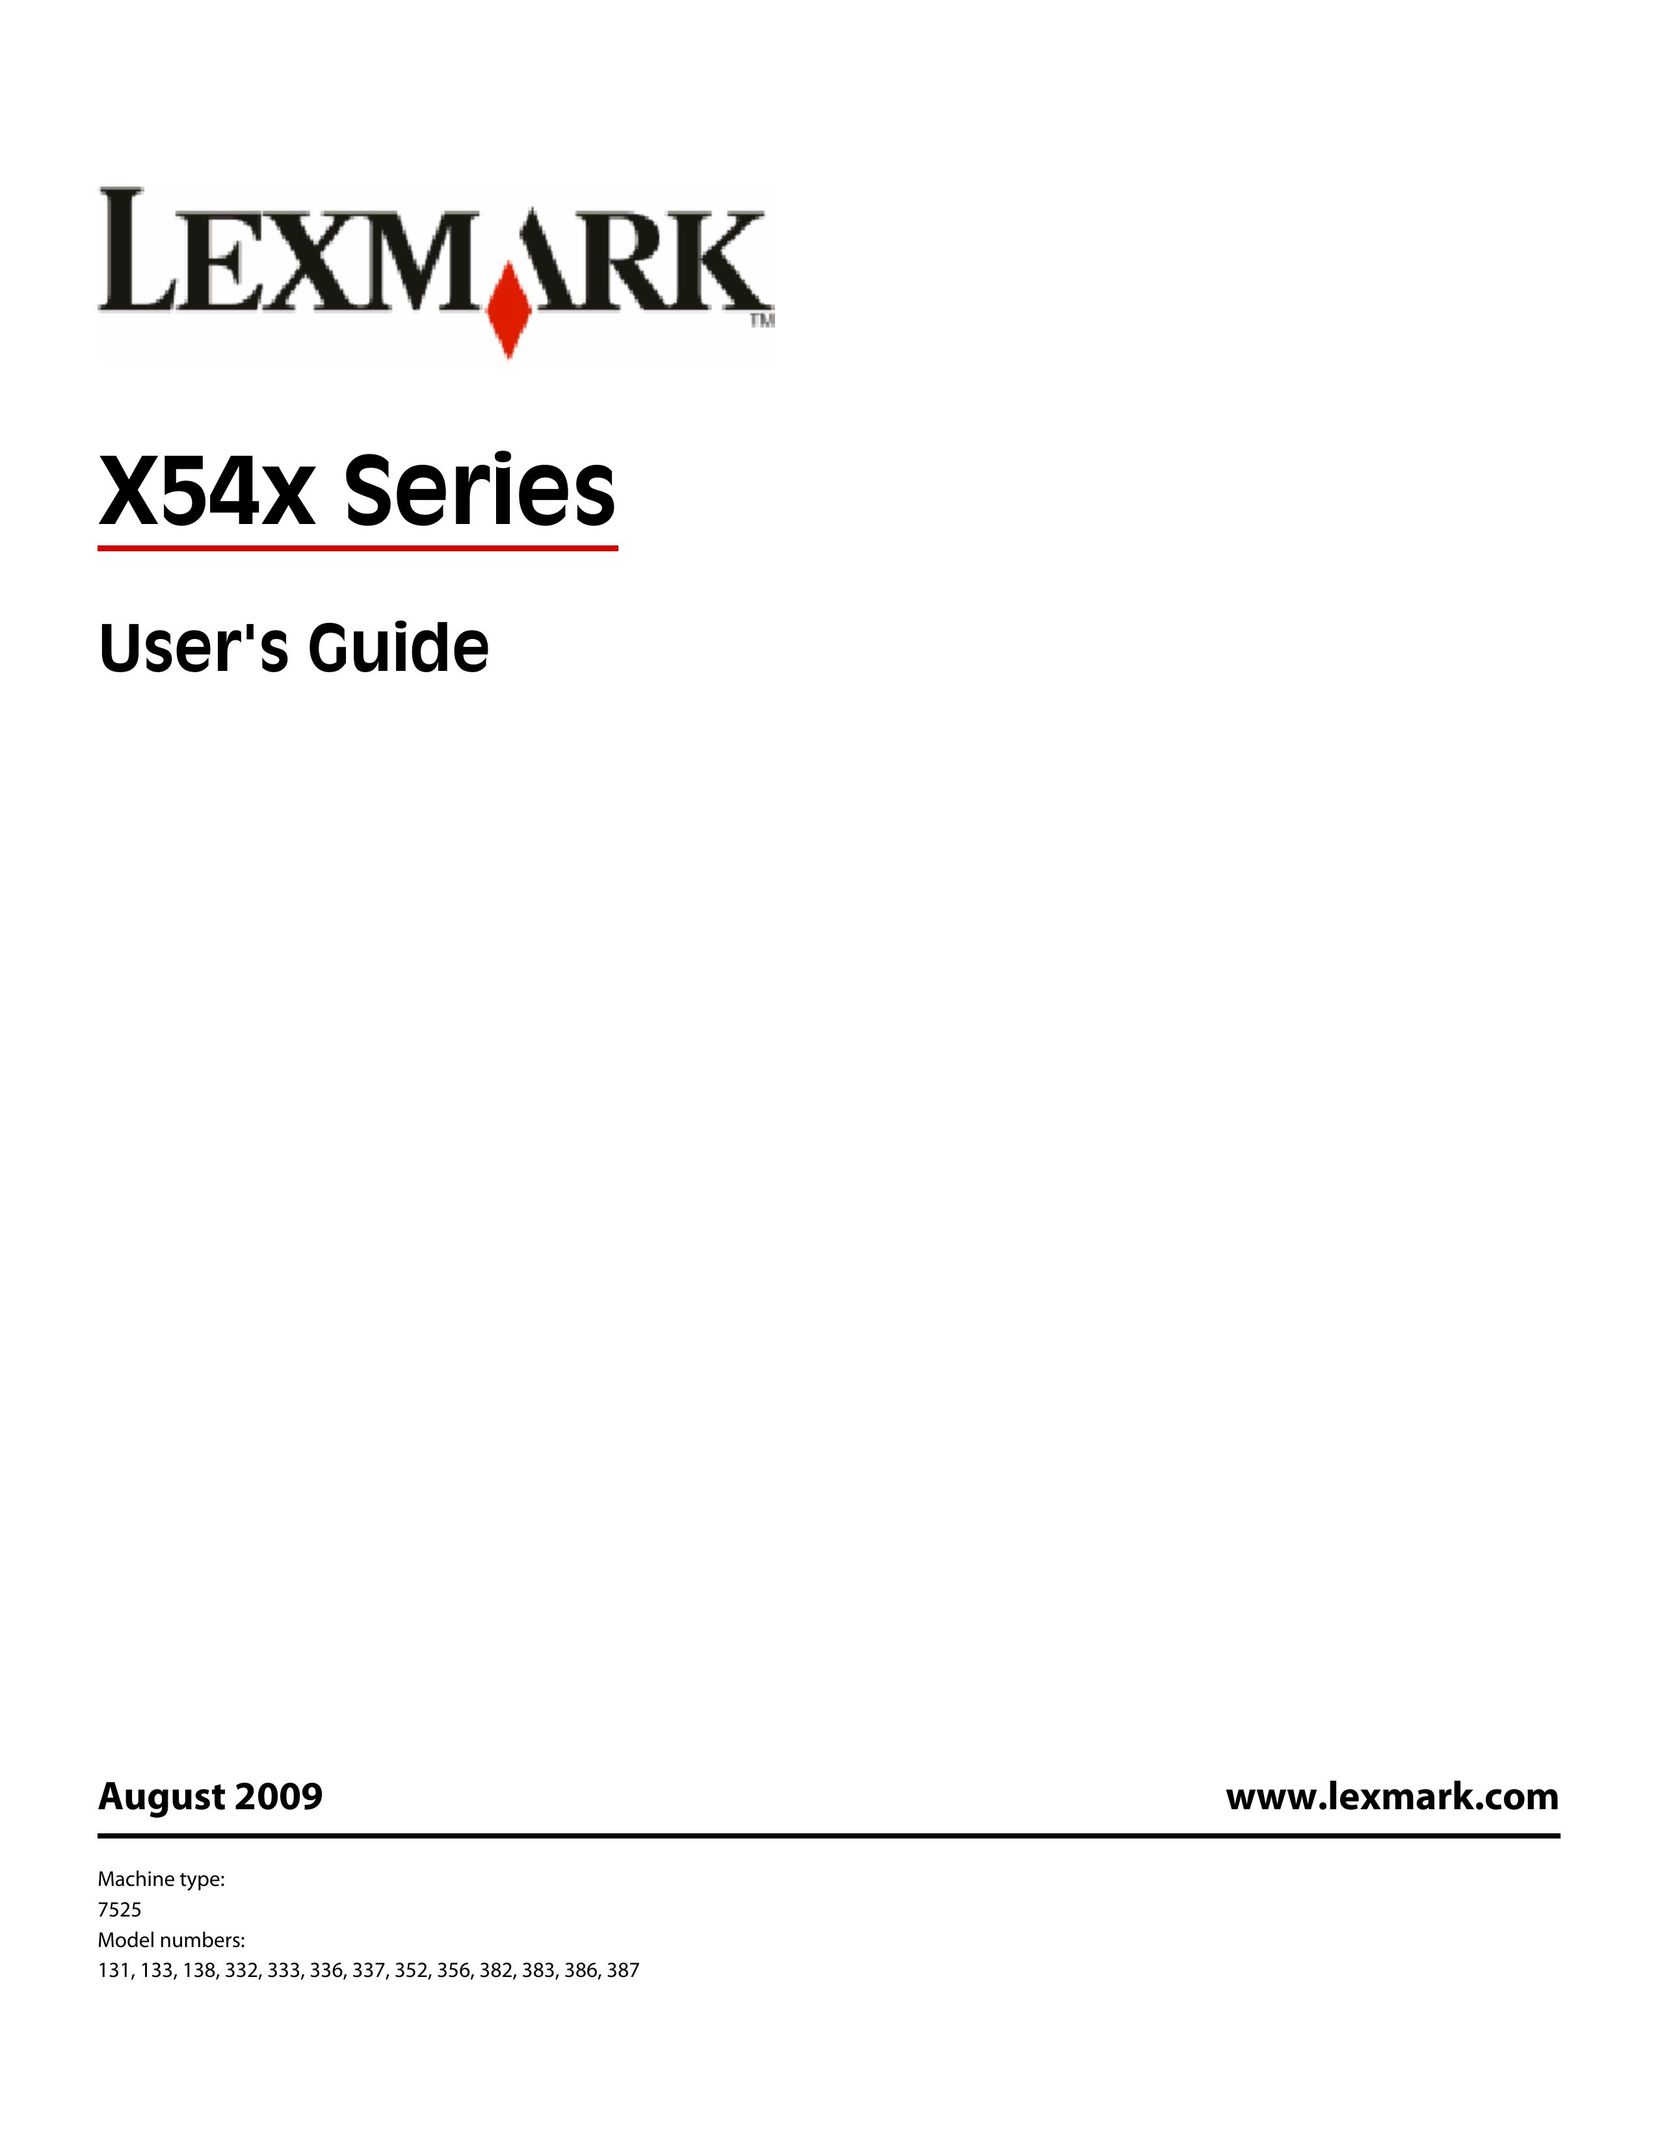 Lexmark 383 All in One Printer User Manual